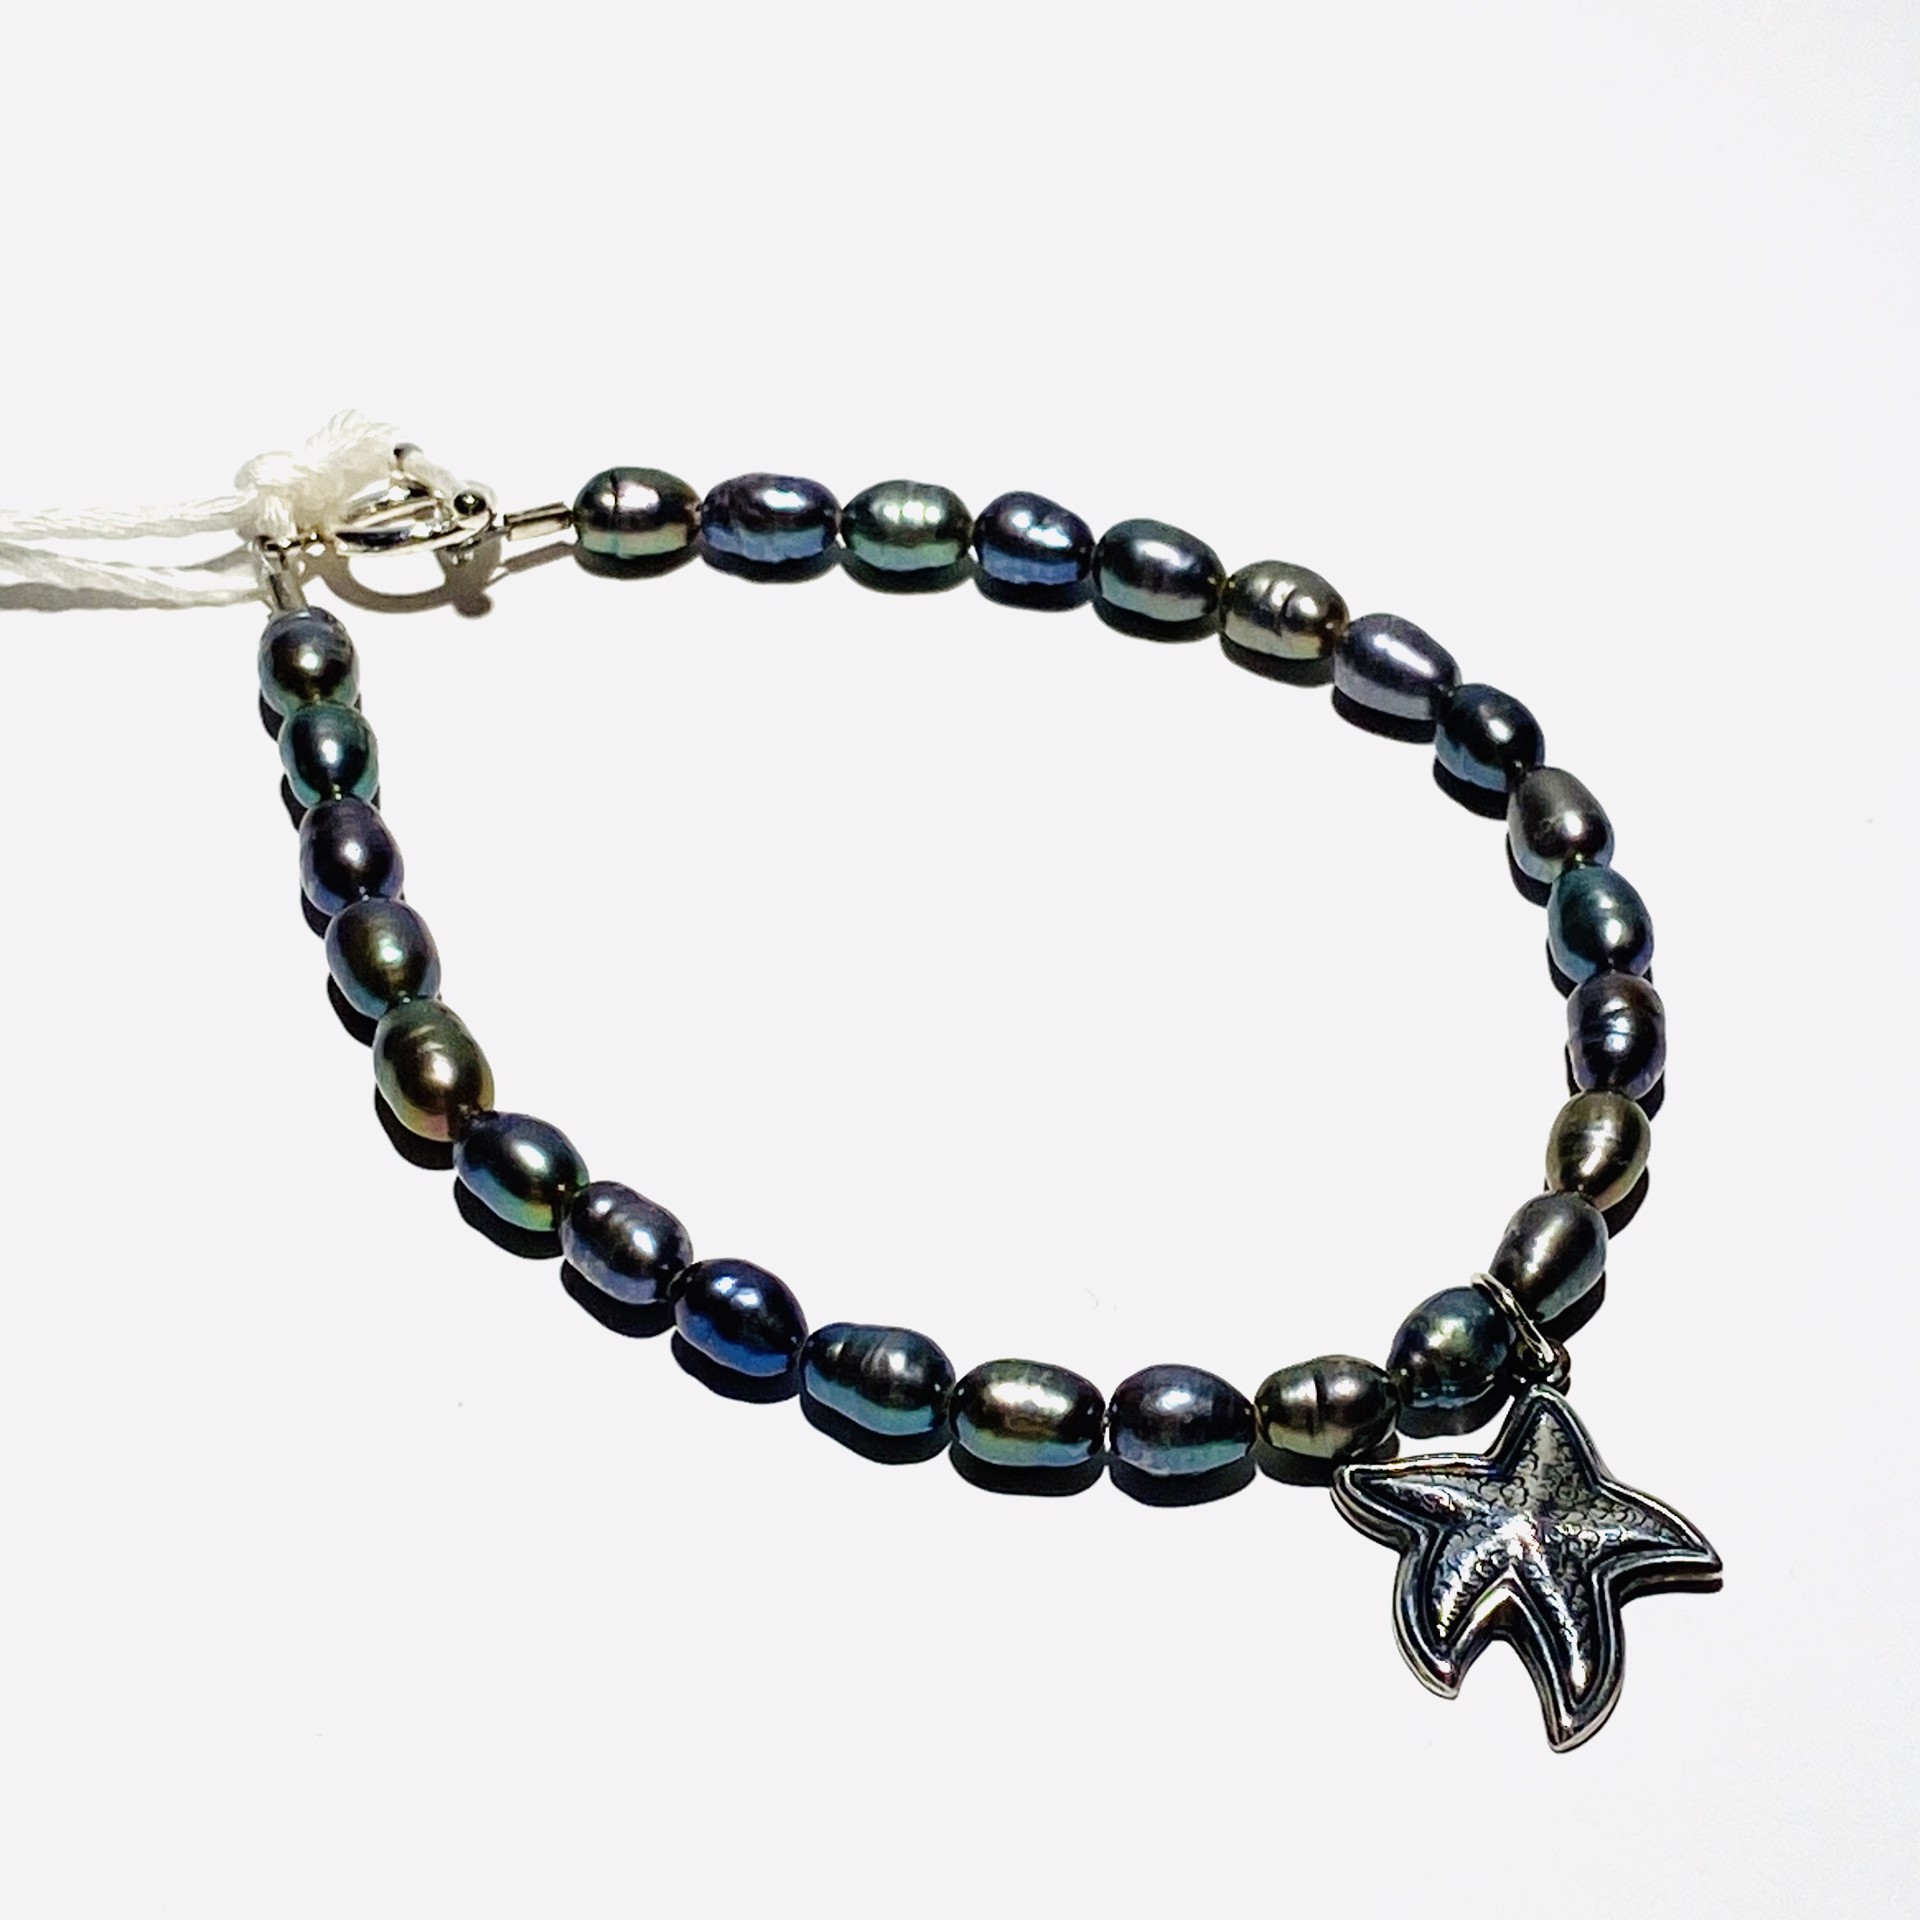 Peacock Pearl Bracelet starfish charm #2 by Nance Trueworthy